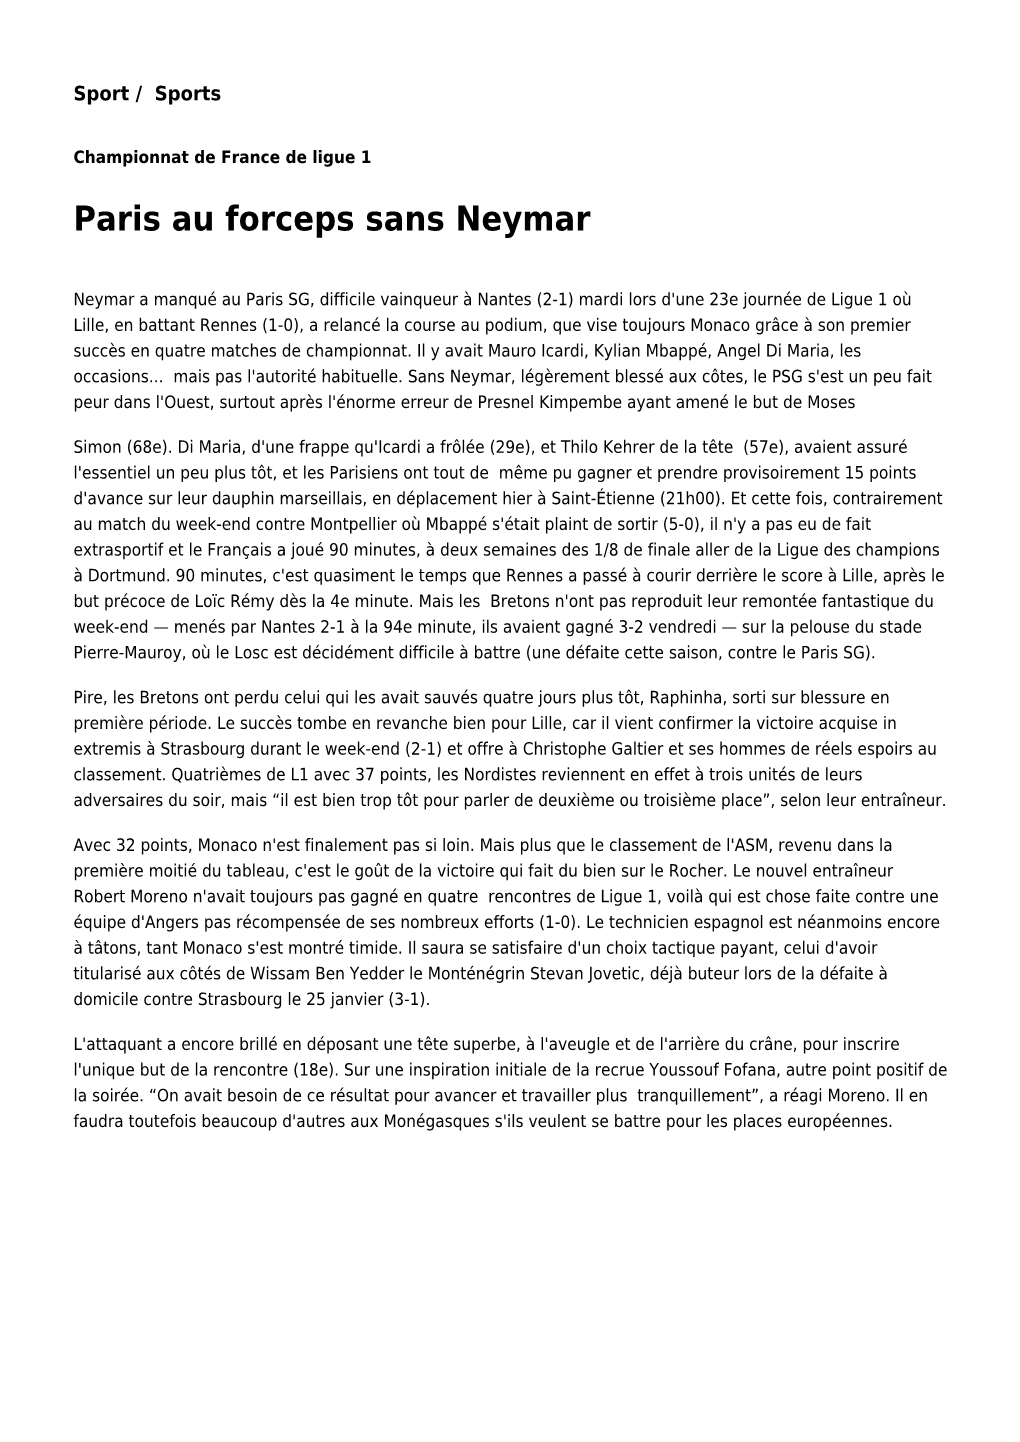 Paris Au Forceps Sans Neymar